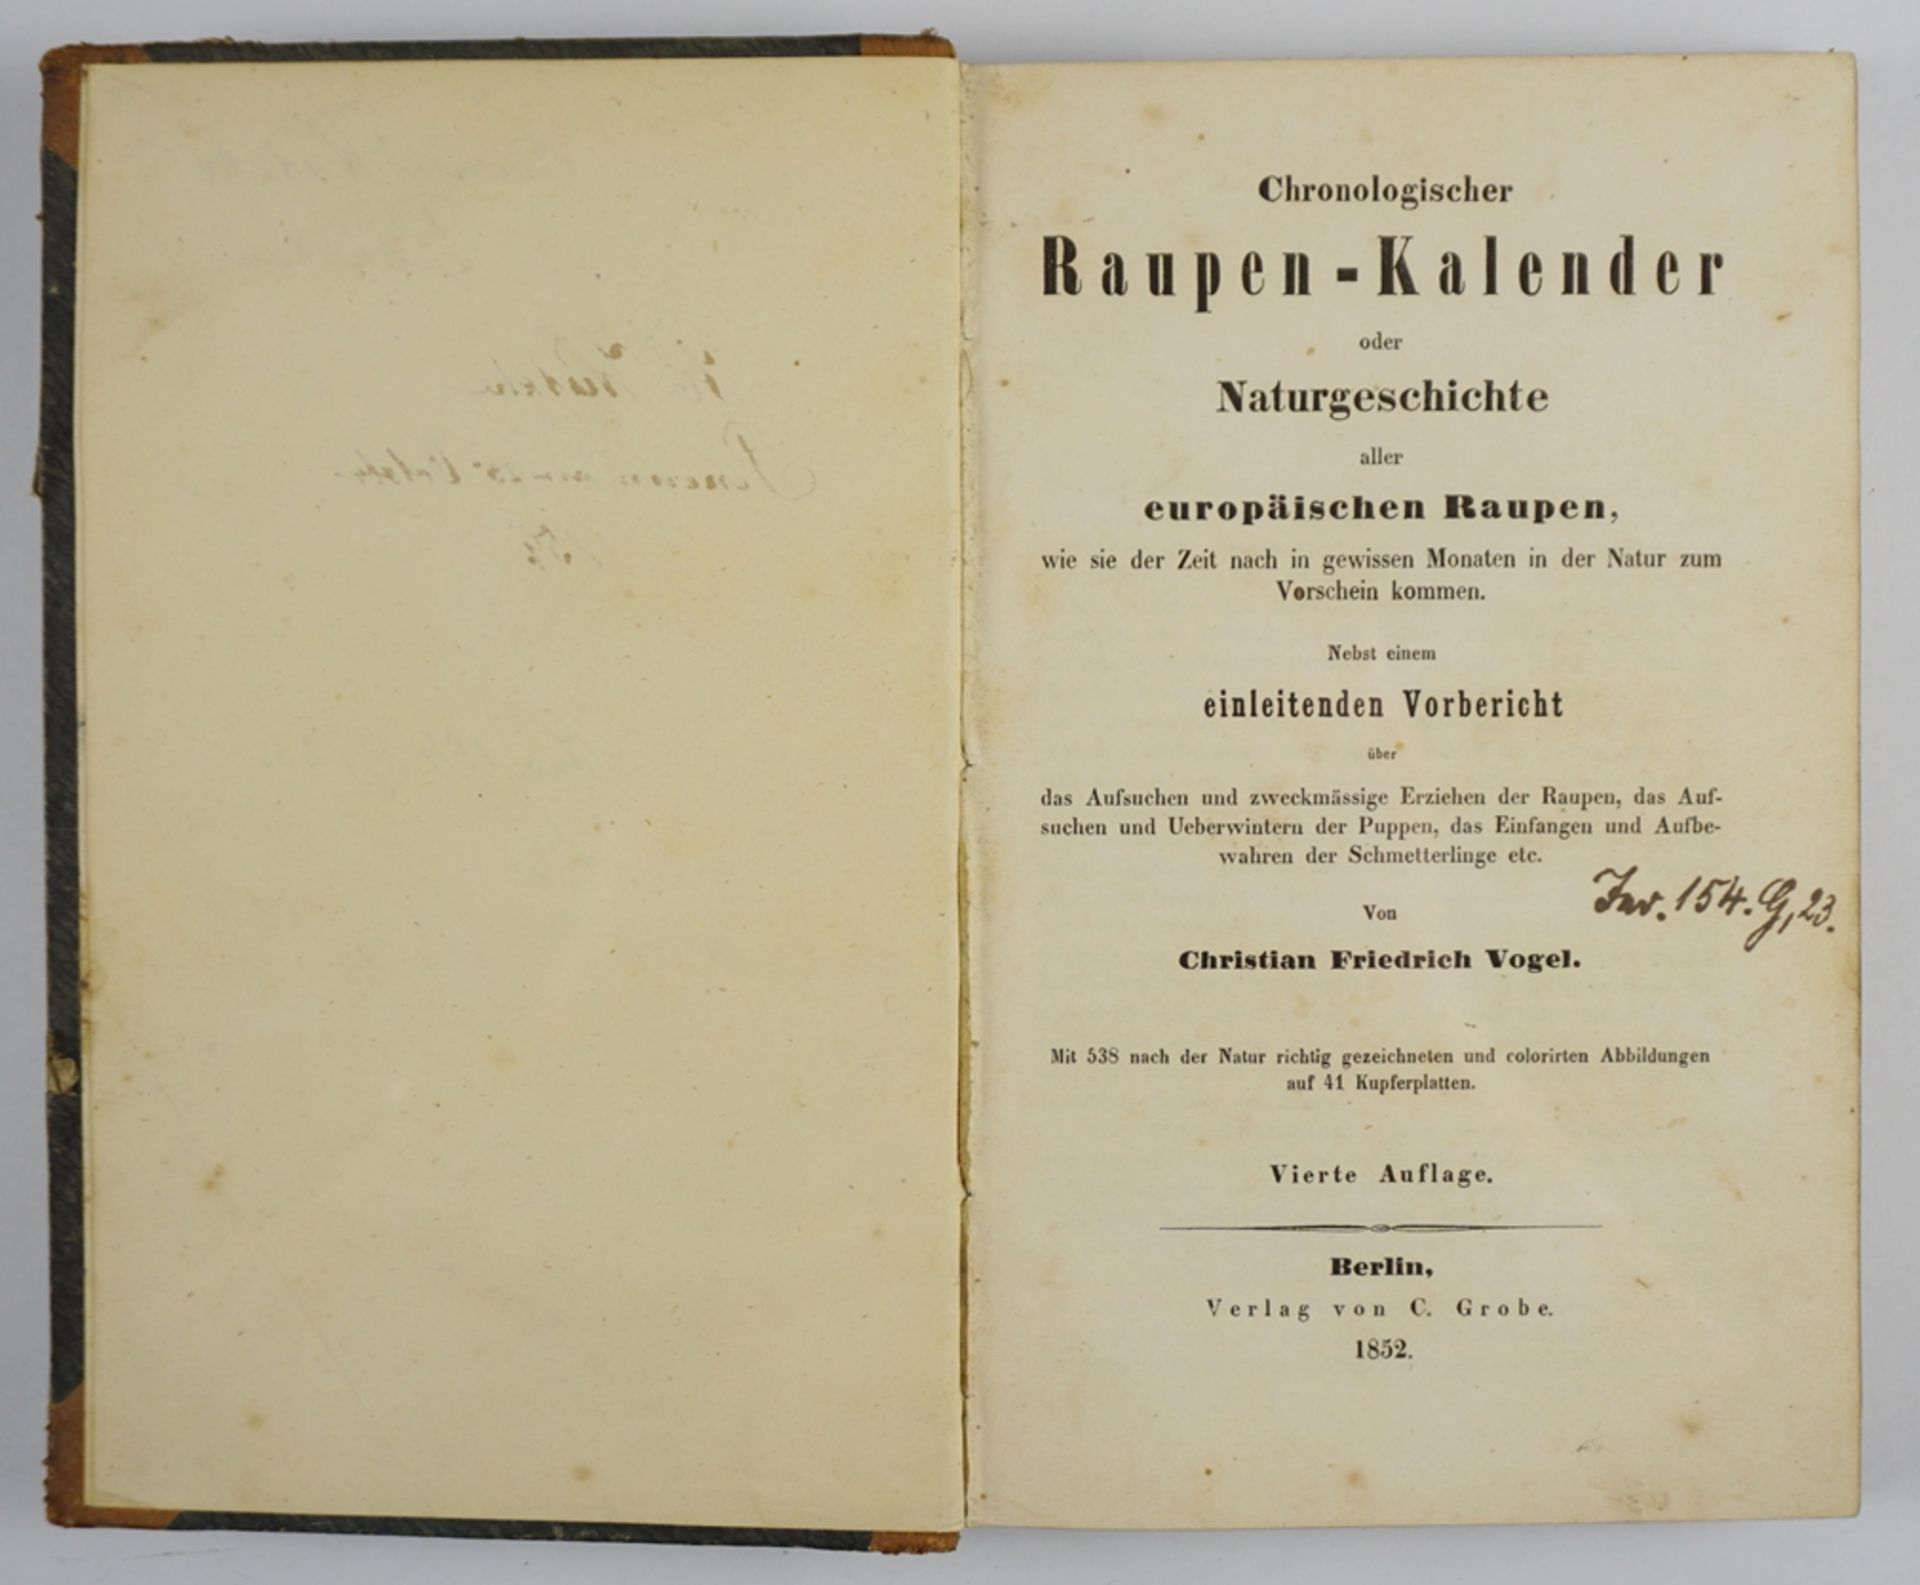 Chronologischer Raupenkalender, Christian Friedrich Vogel, 1852